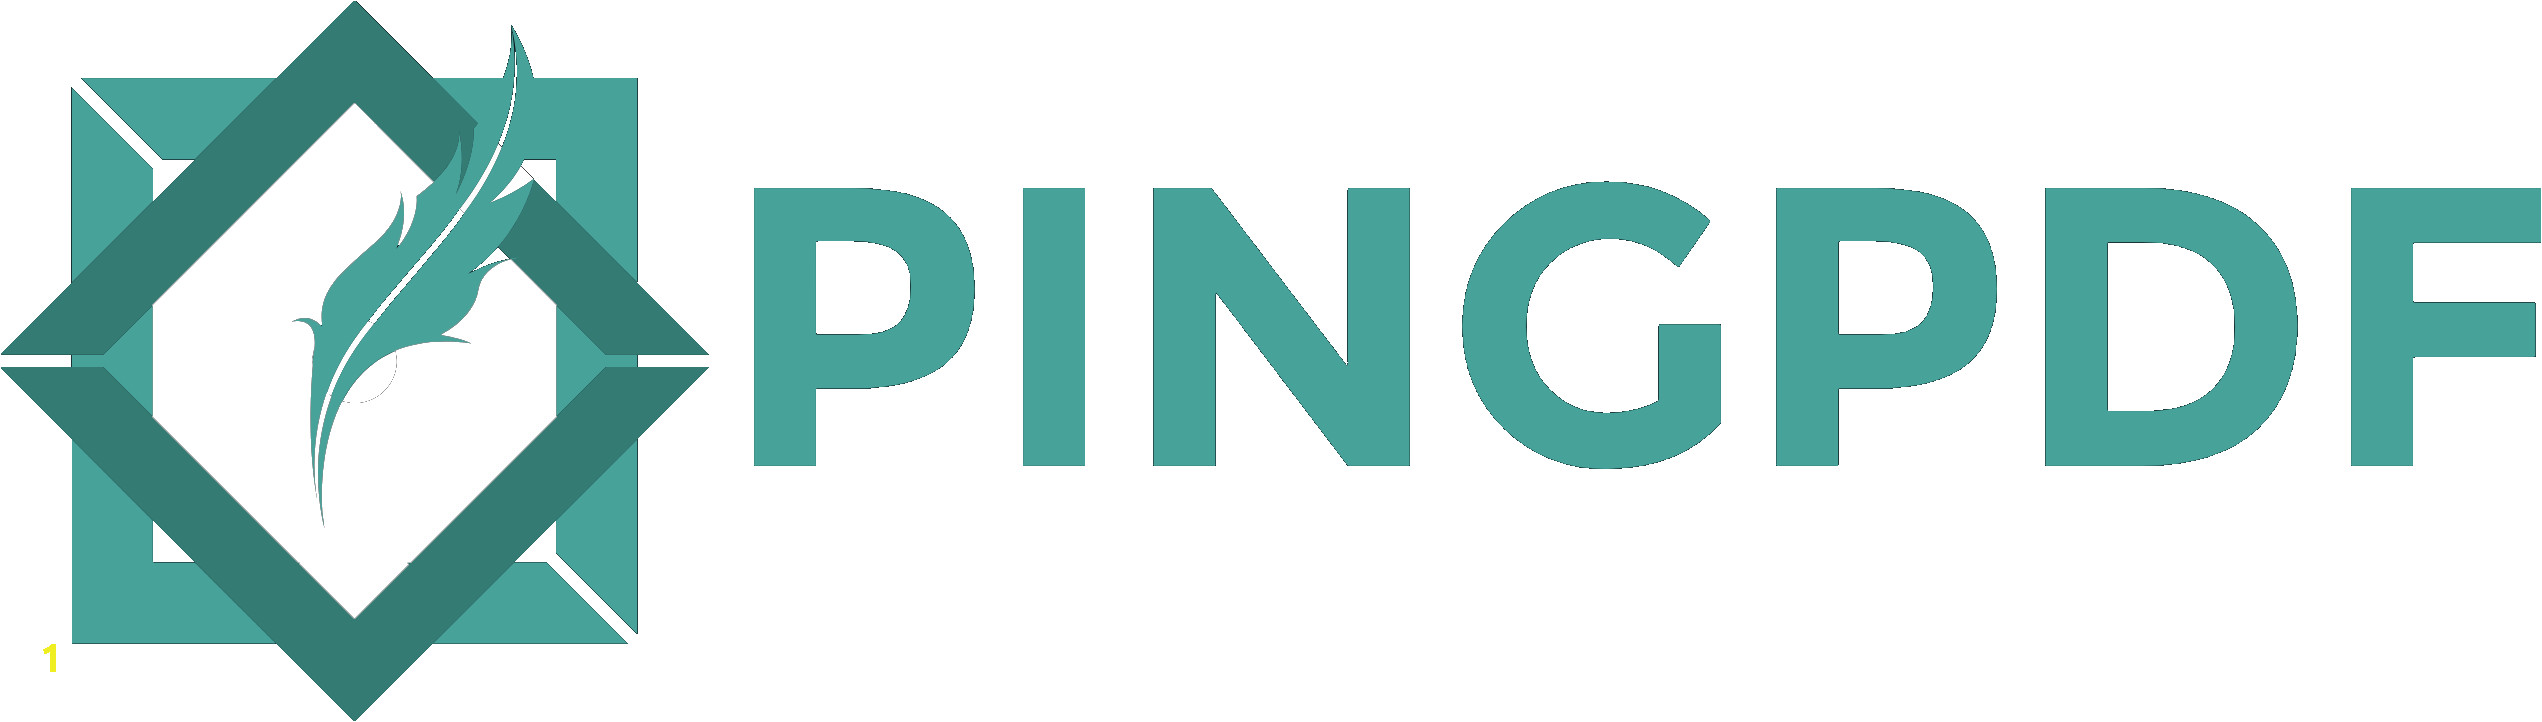 pingpdf logo